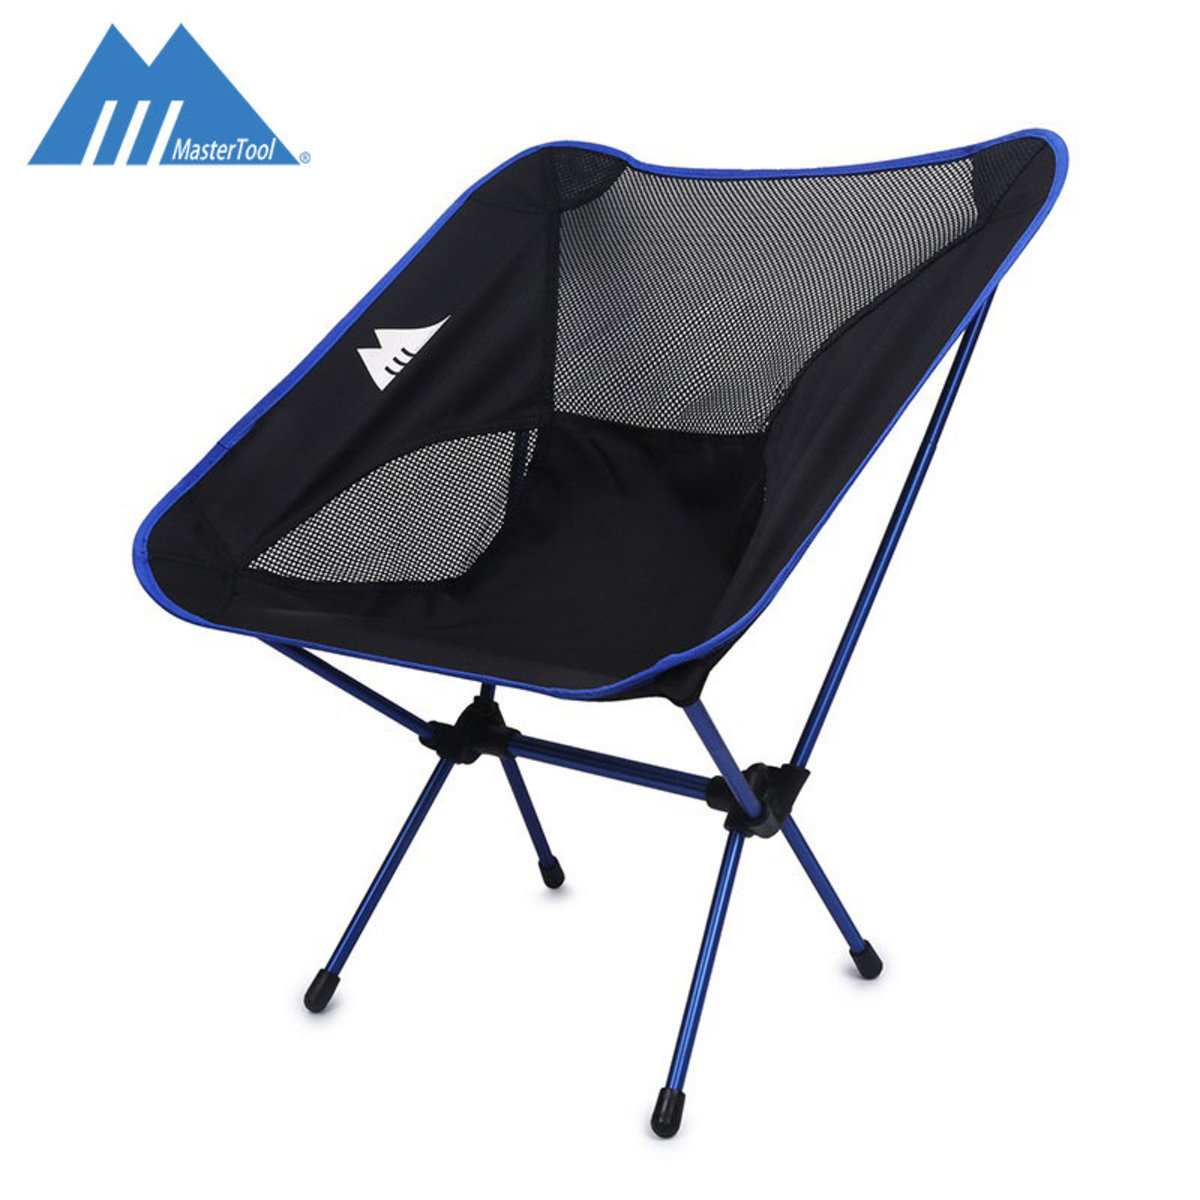 MasterTool - Camping Foldable Chair, Fishing chair (Blue)